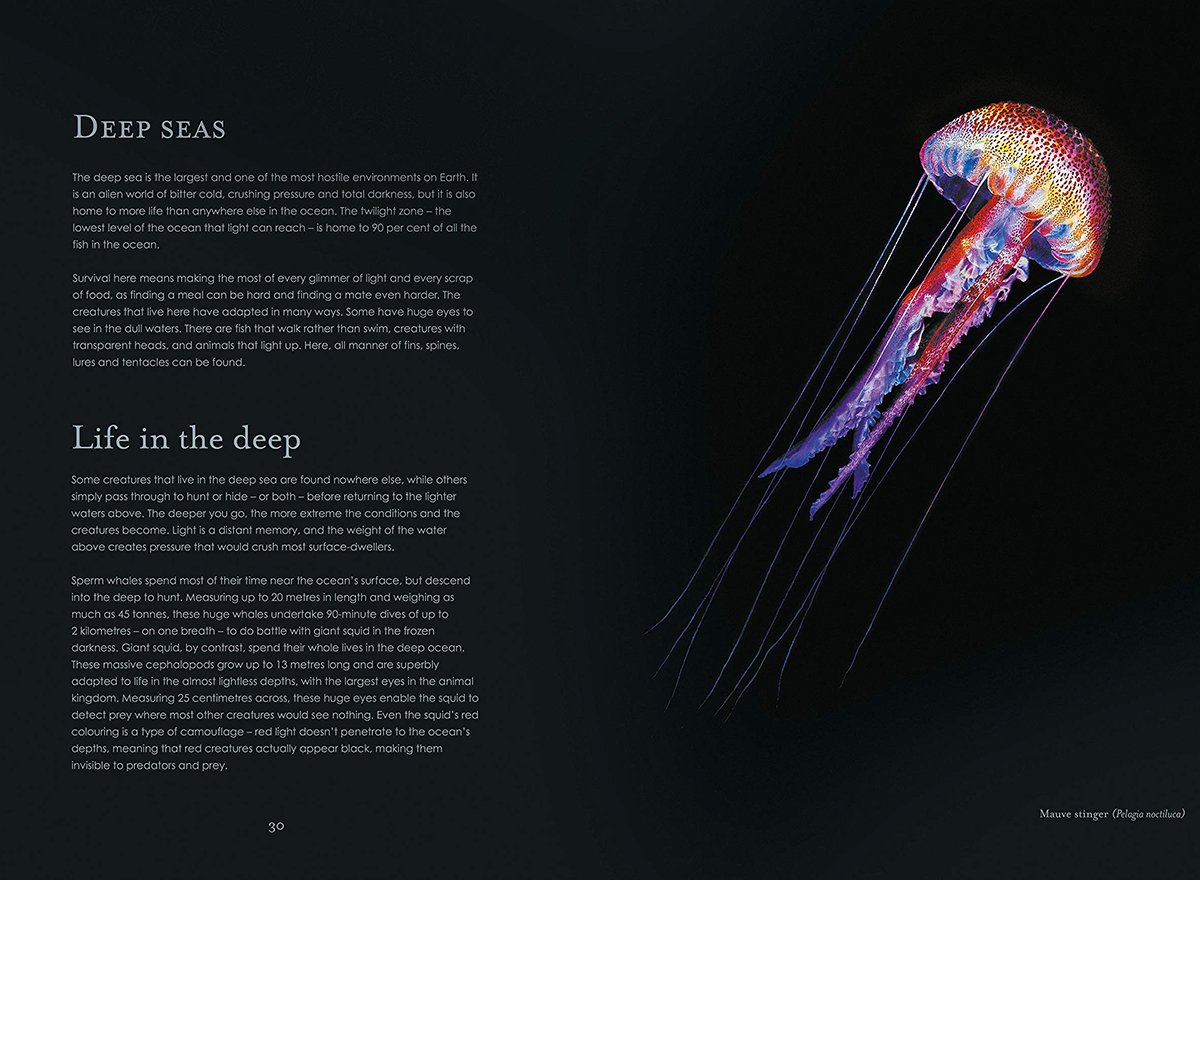 ben-rothery-jellyfish-illustration.jpg